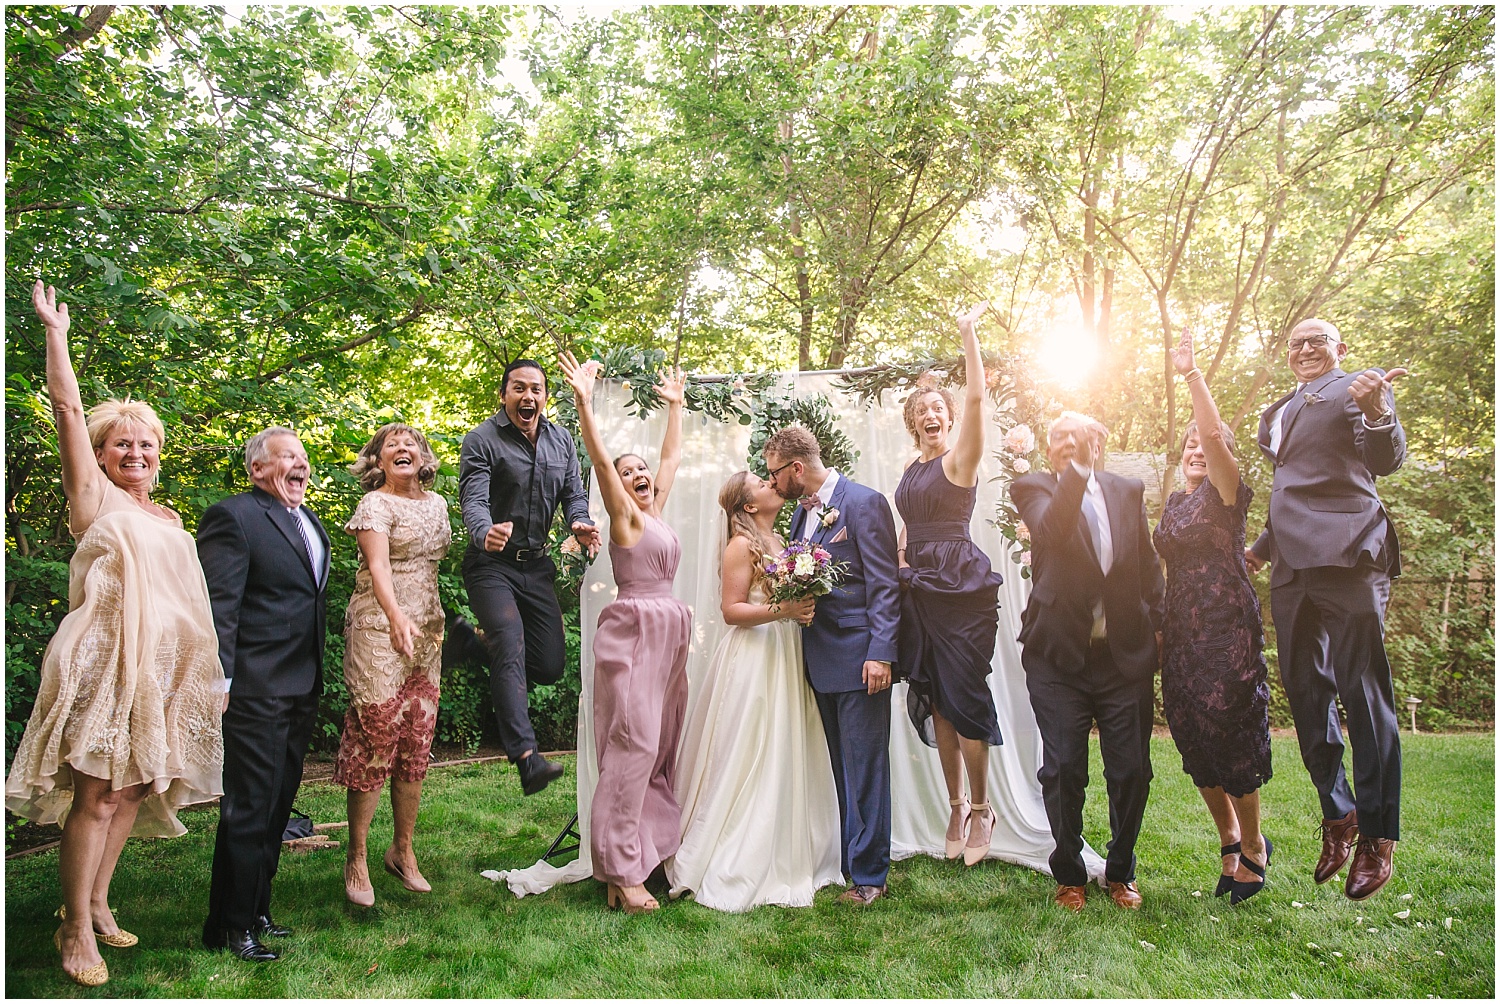 Fun family photos at intimate backyard wedding